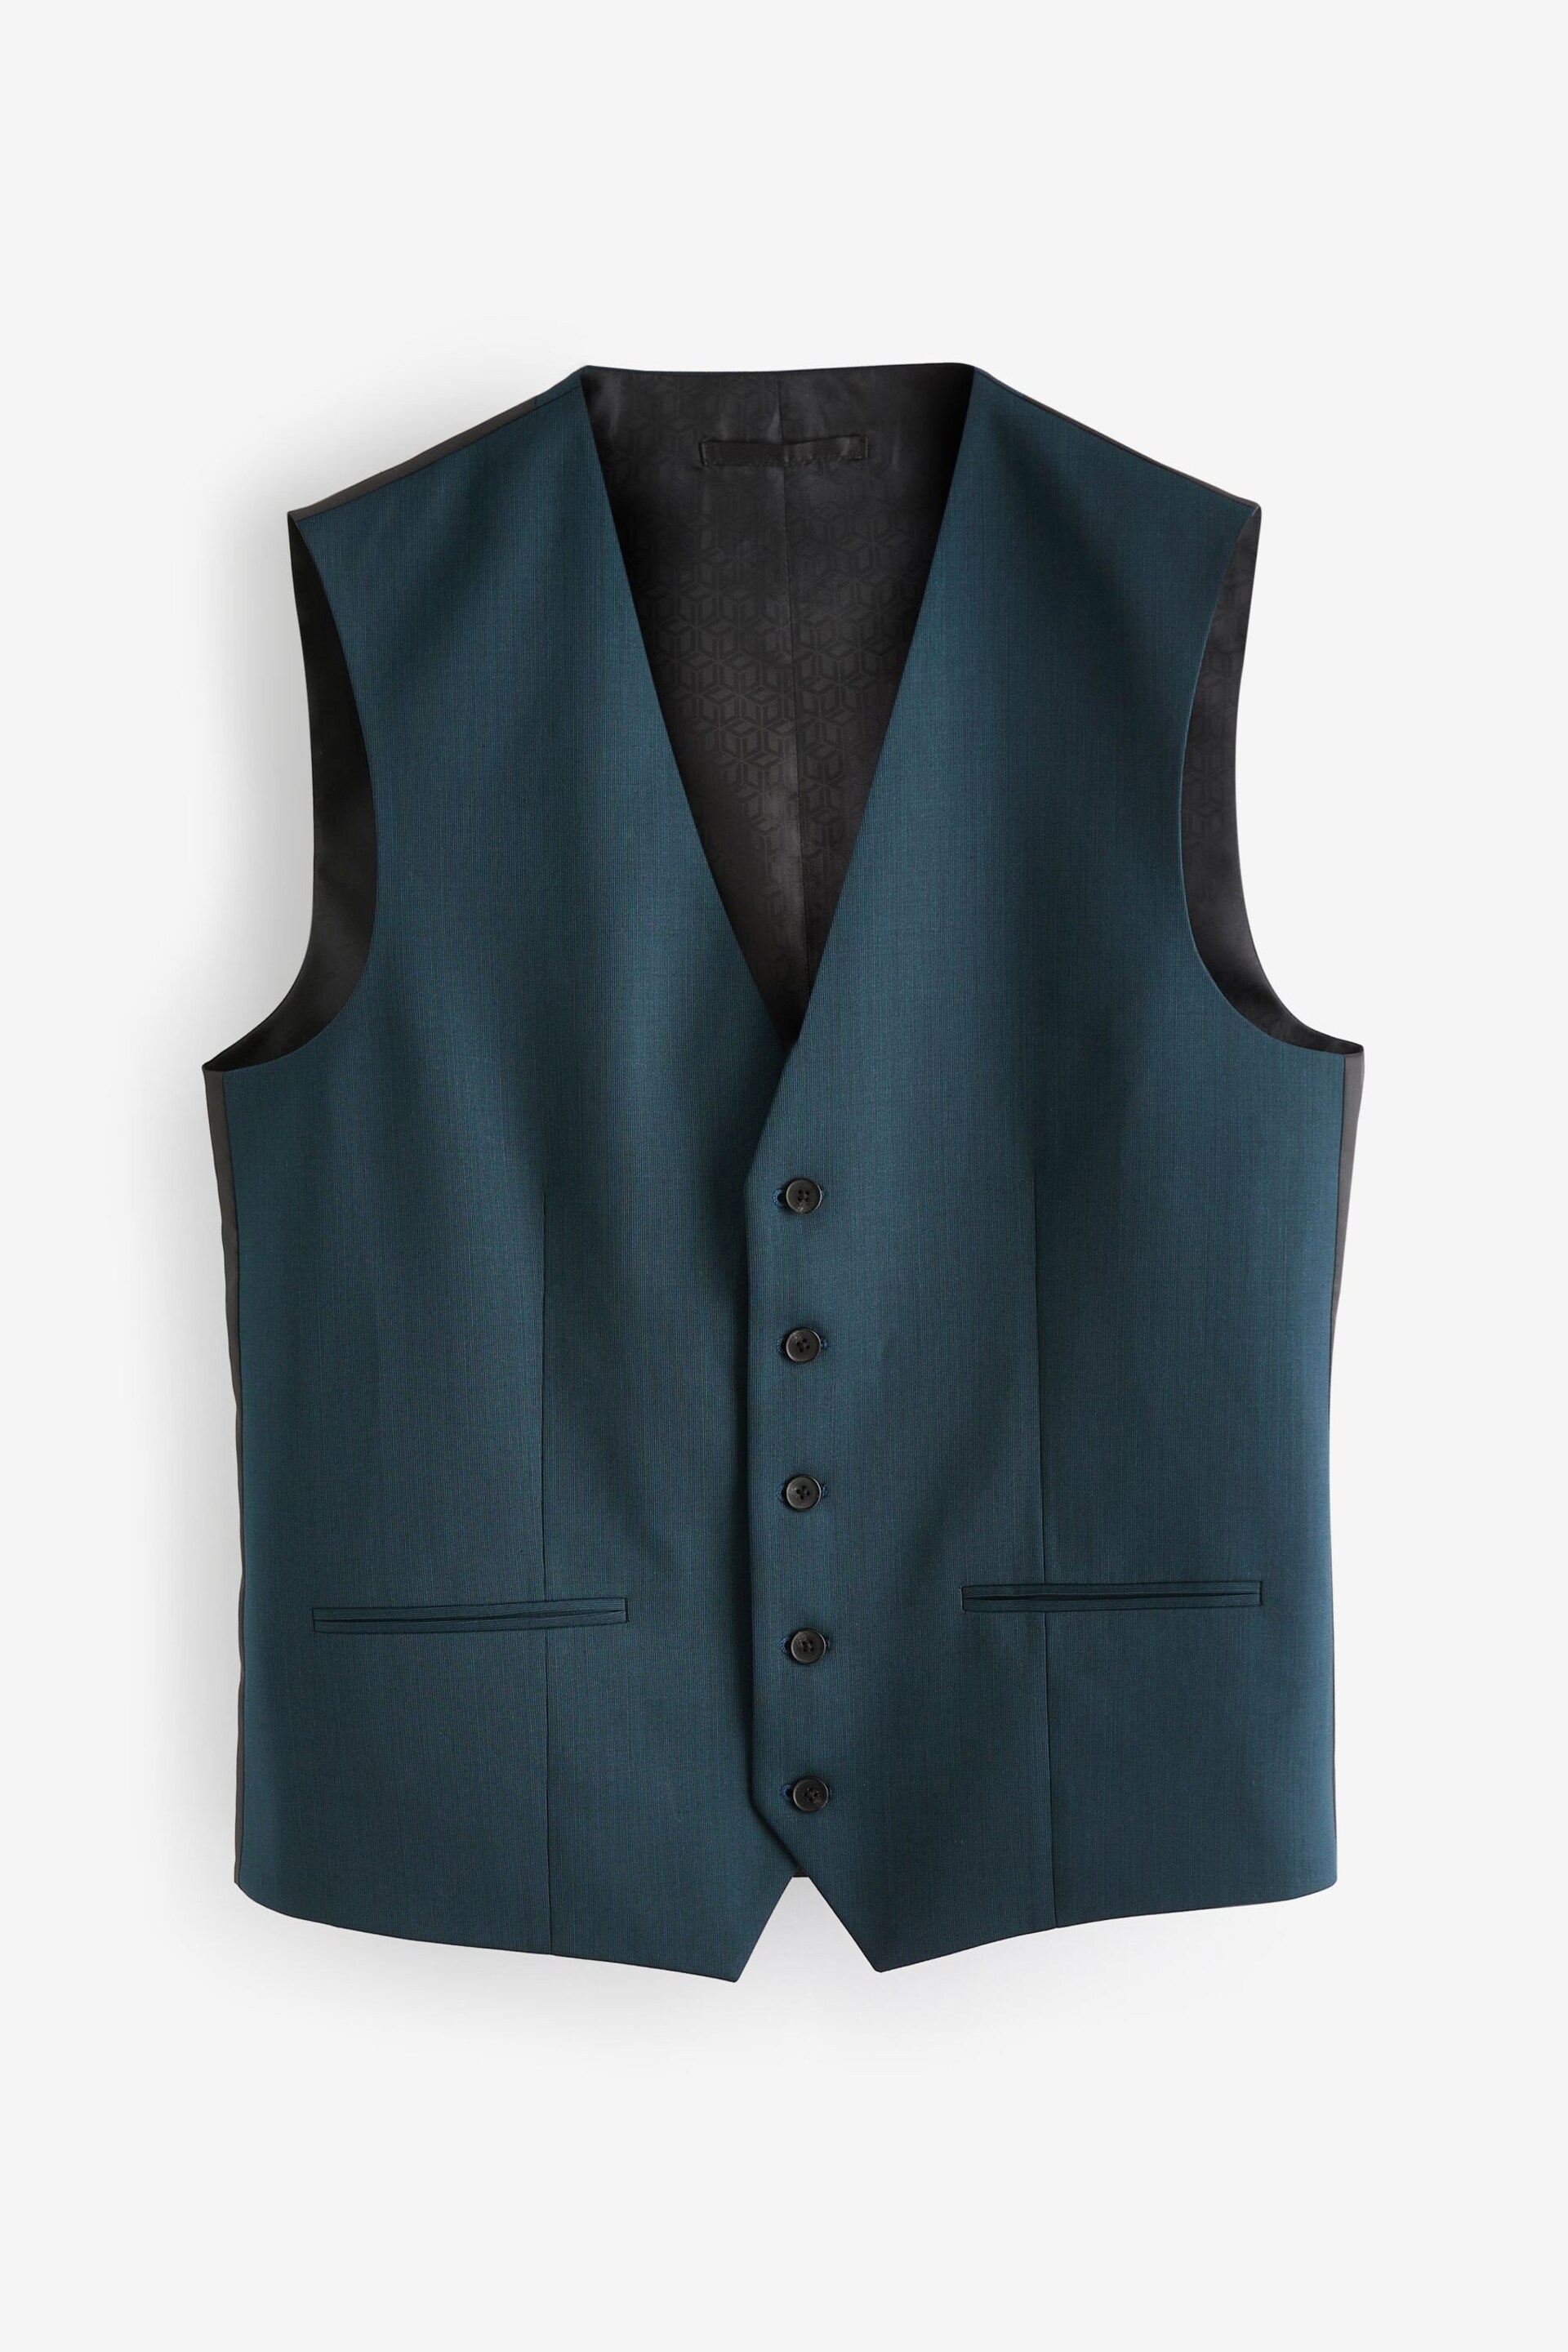 Teal Blue Wool Blend Suit Waistcoat - Image 6 of 10